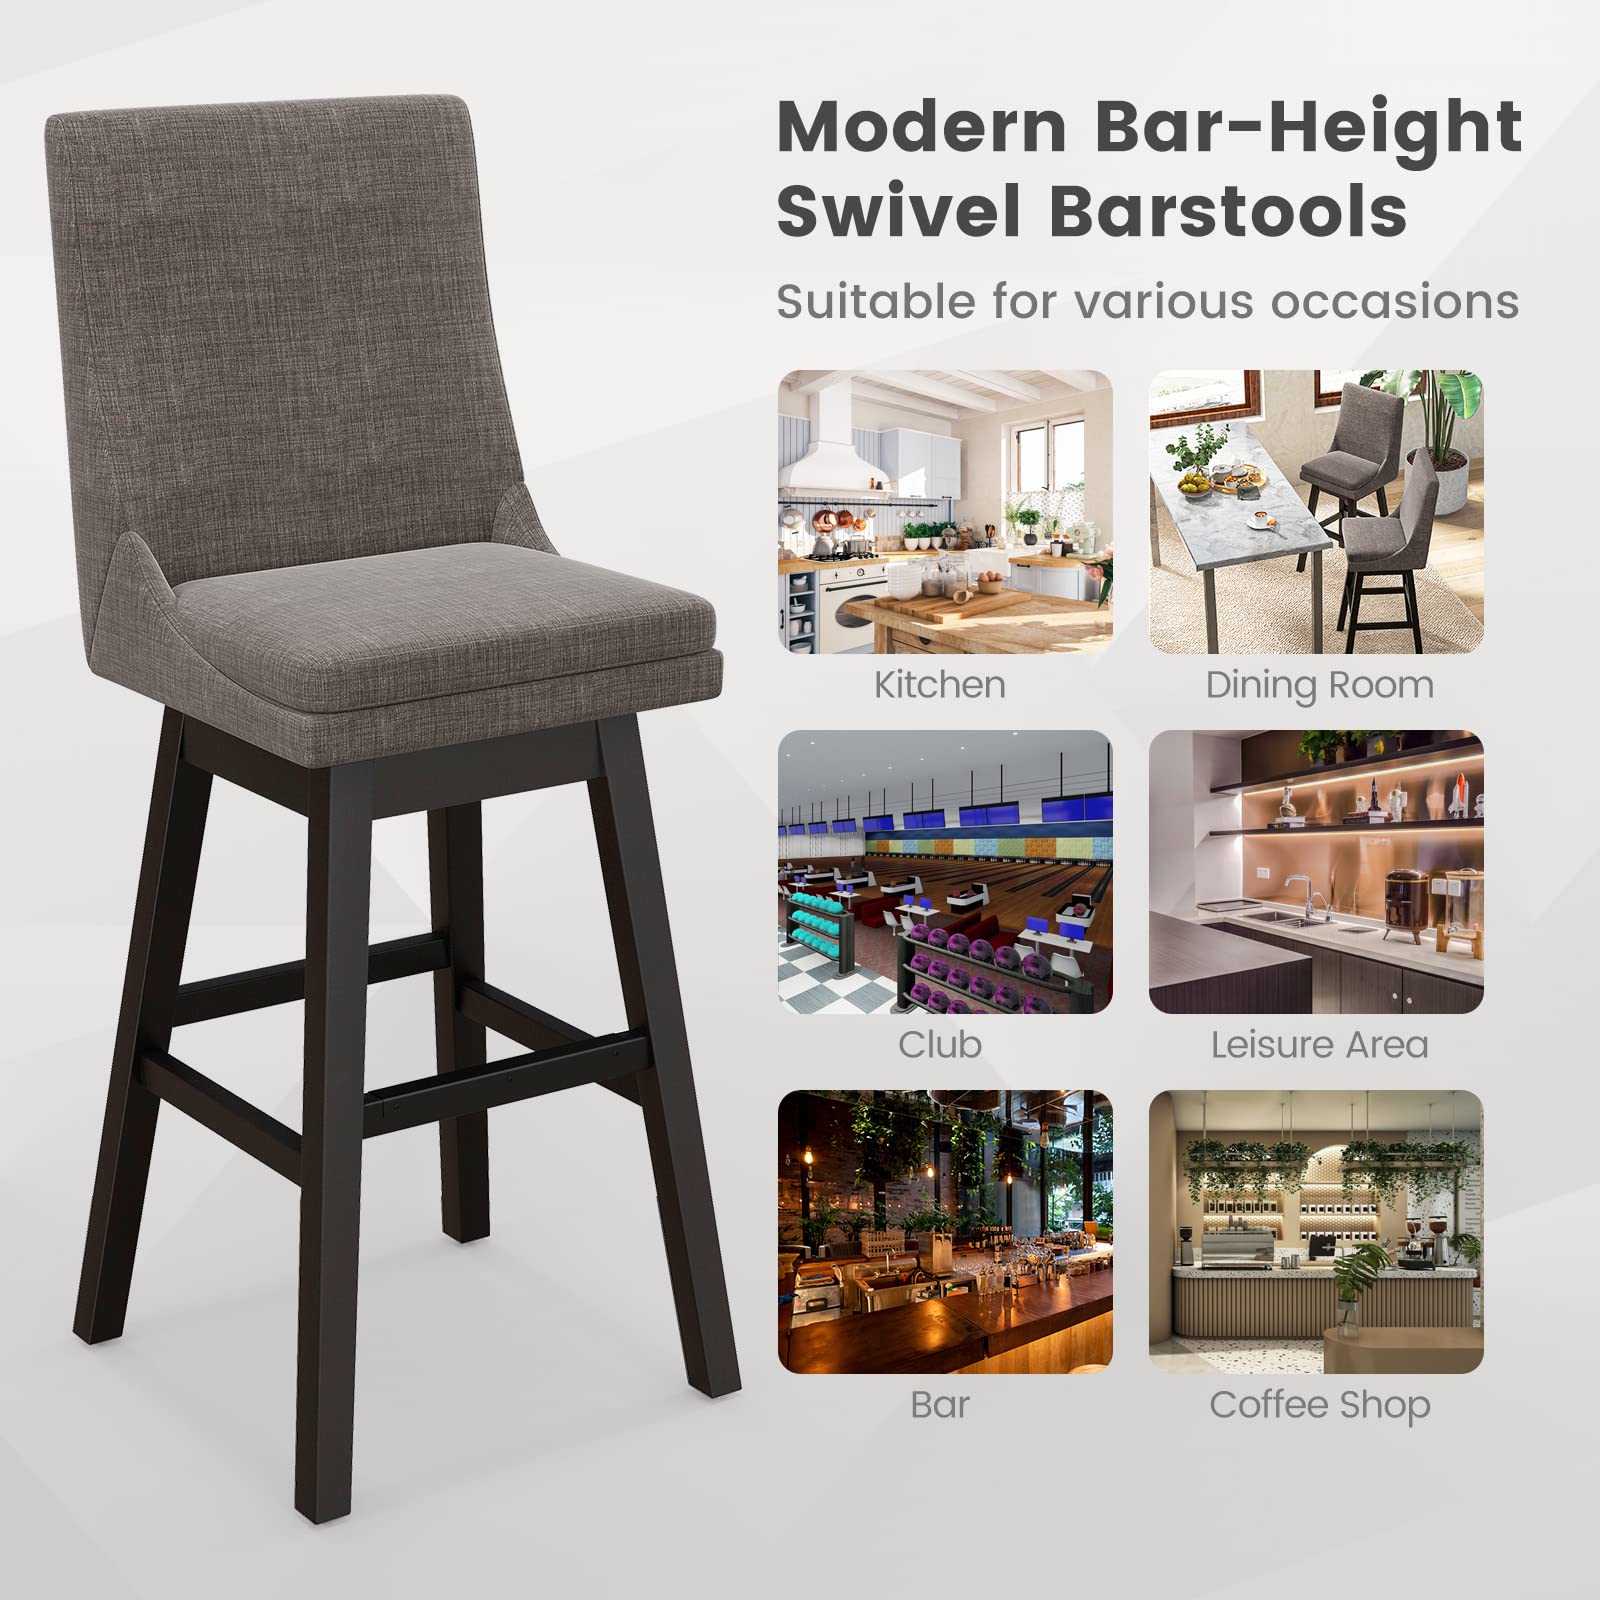 Giantex Bar Stools Set of 2, 30.5" Bar Height 360-degree Swivel Barstools with Rubber Wood Legs, Gray